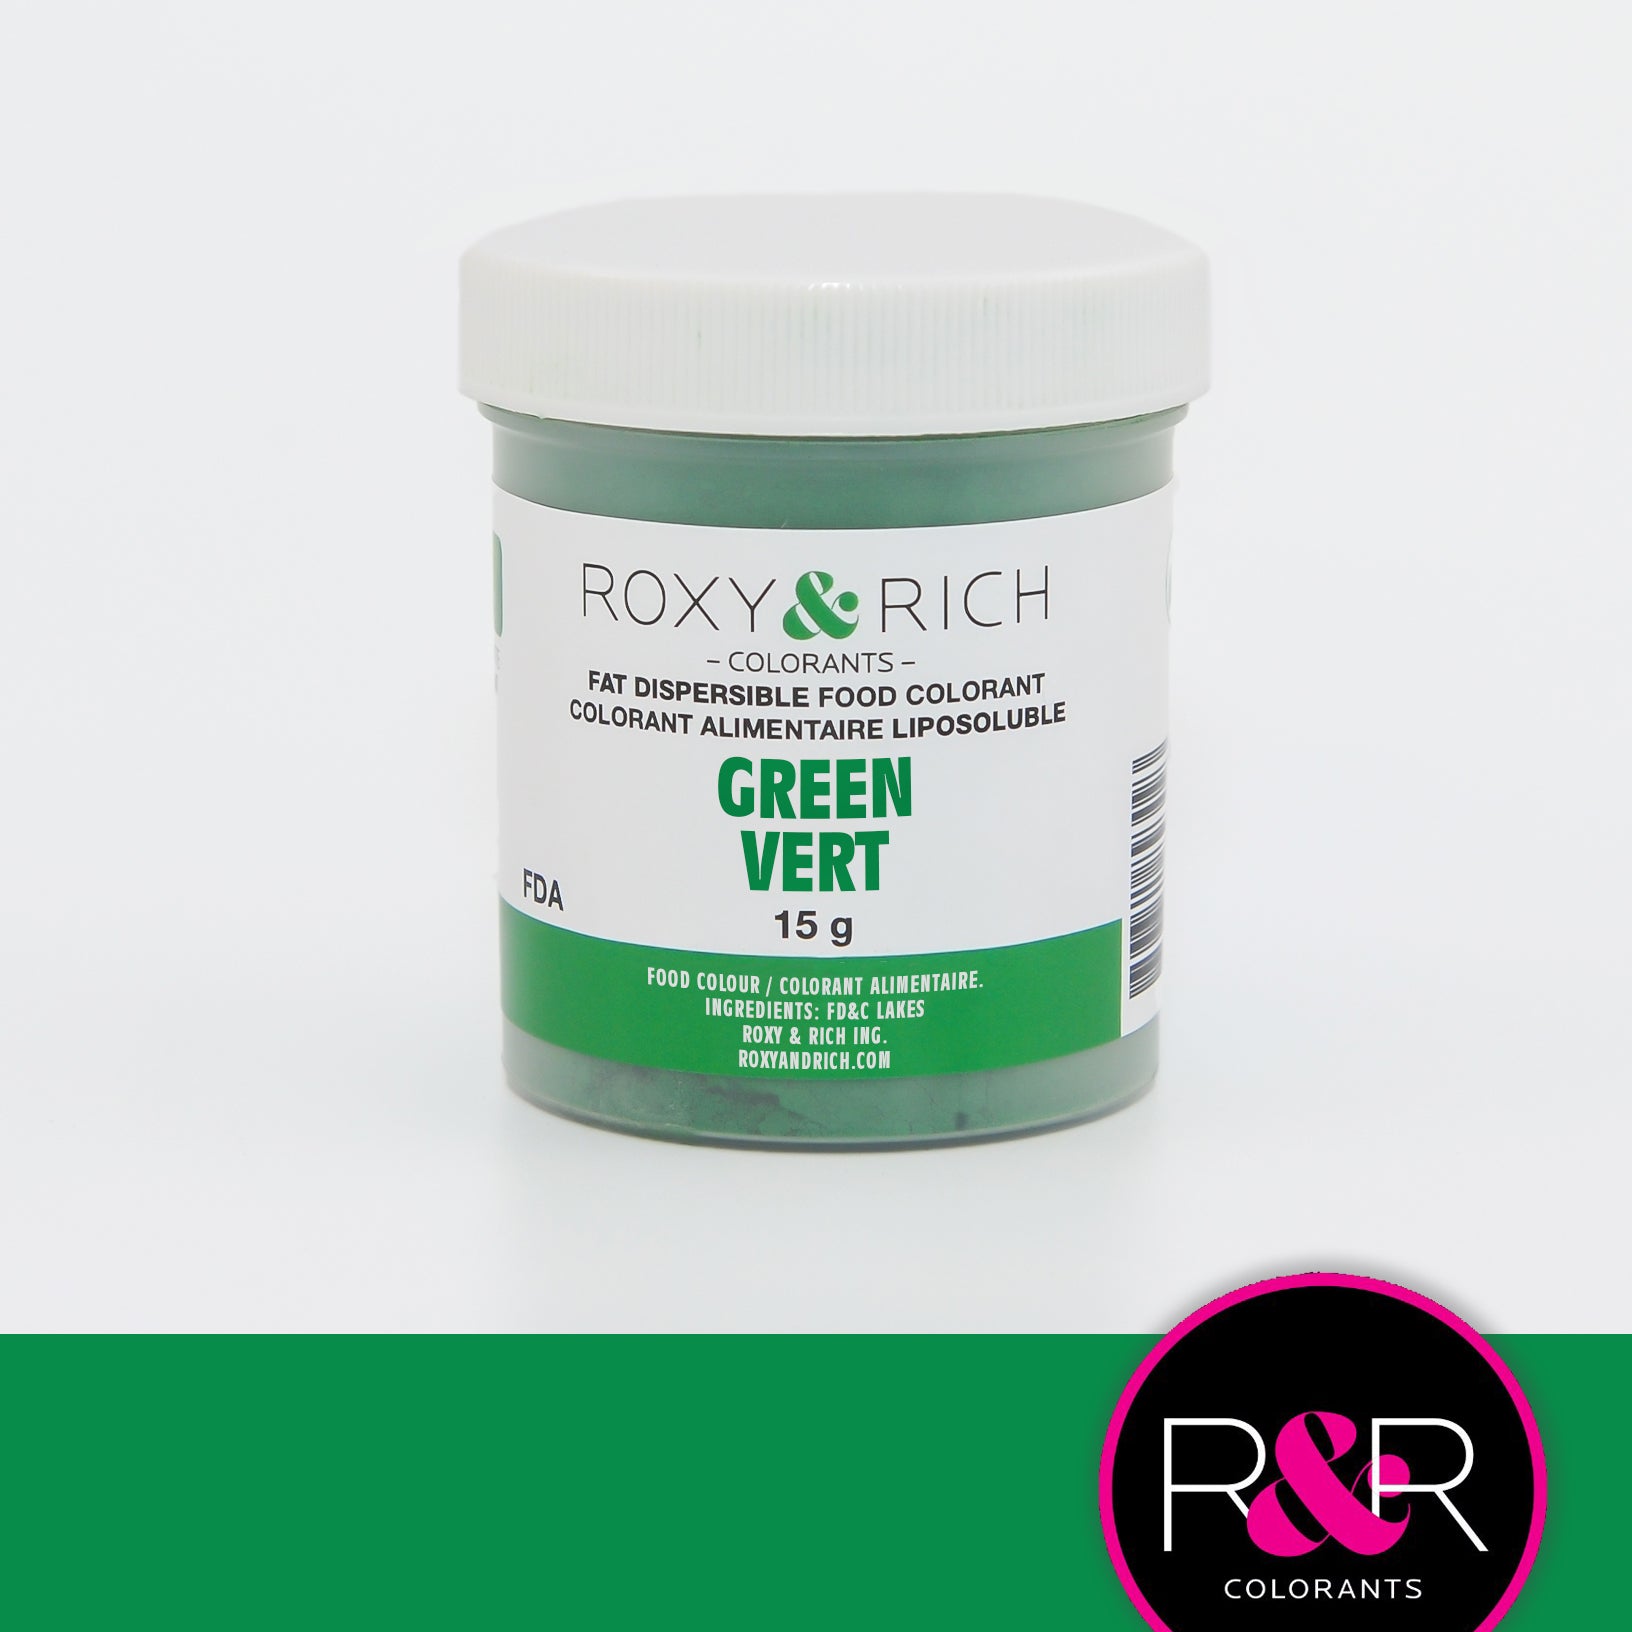 Colour mill - colorant alimentaire liposoluble vert, 20 ml